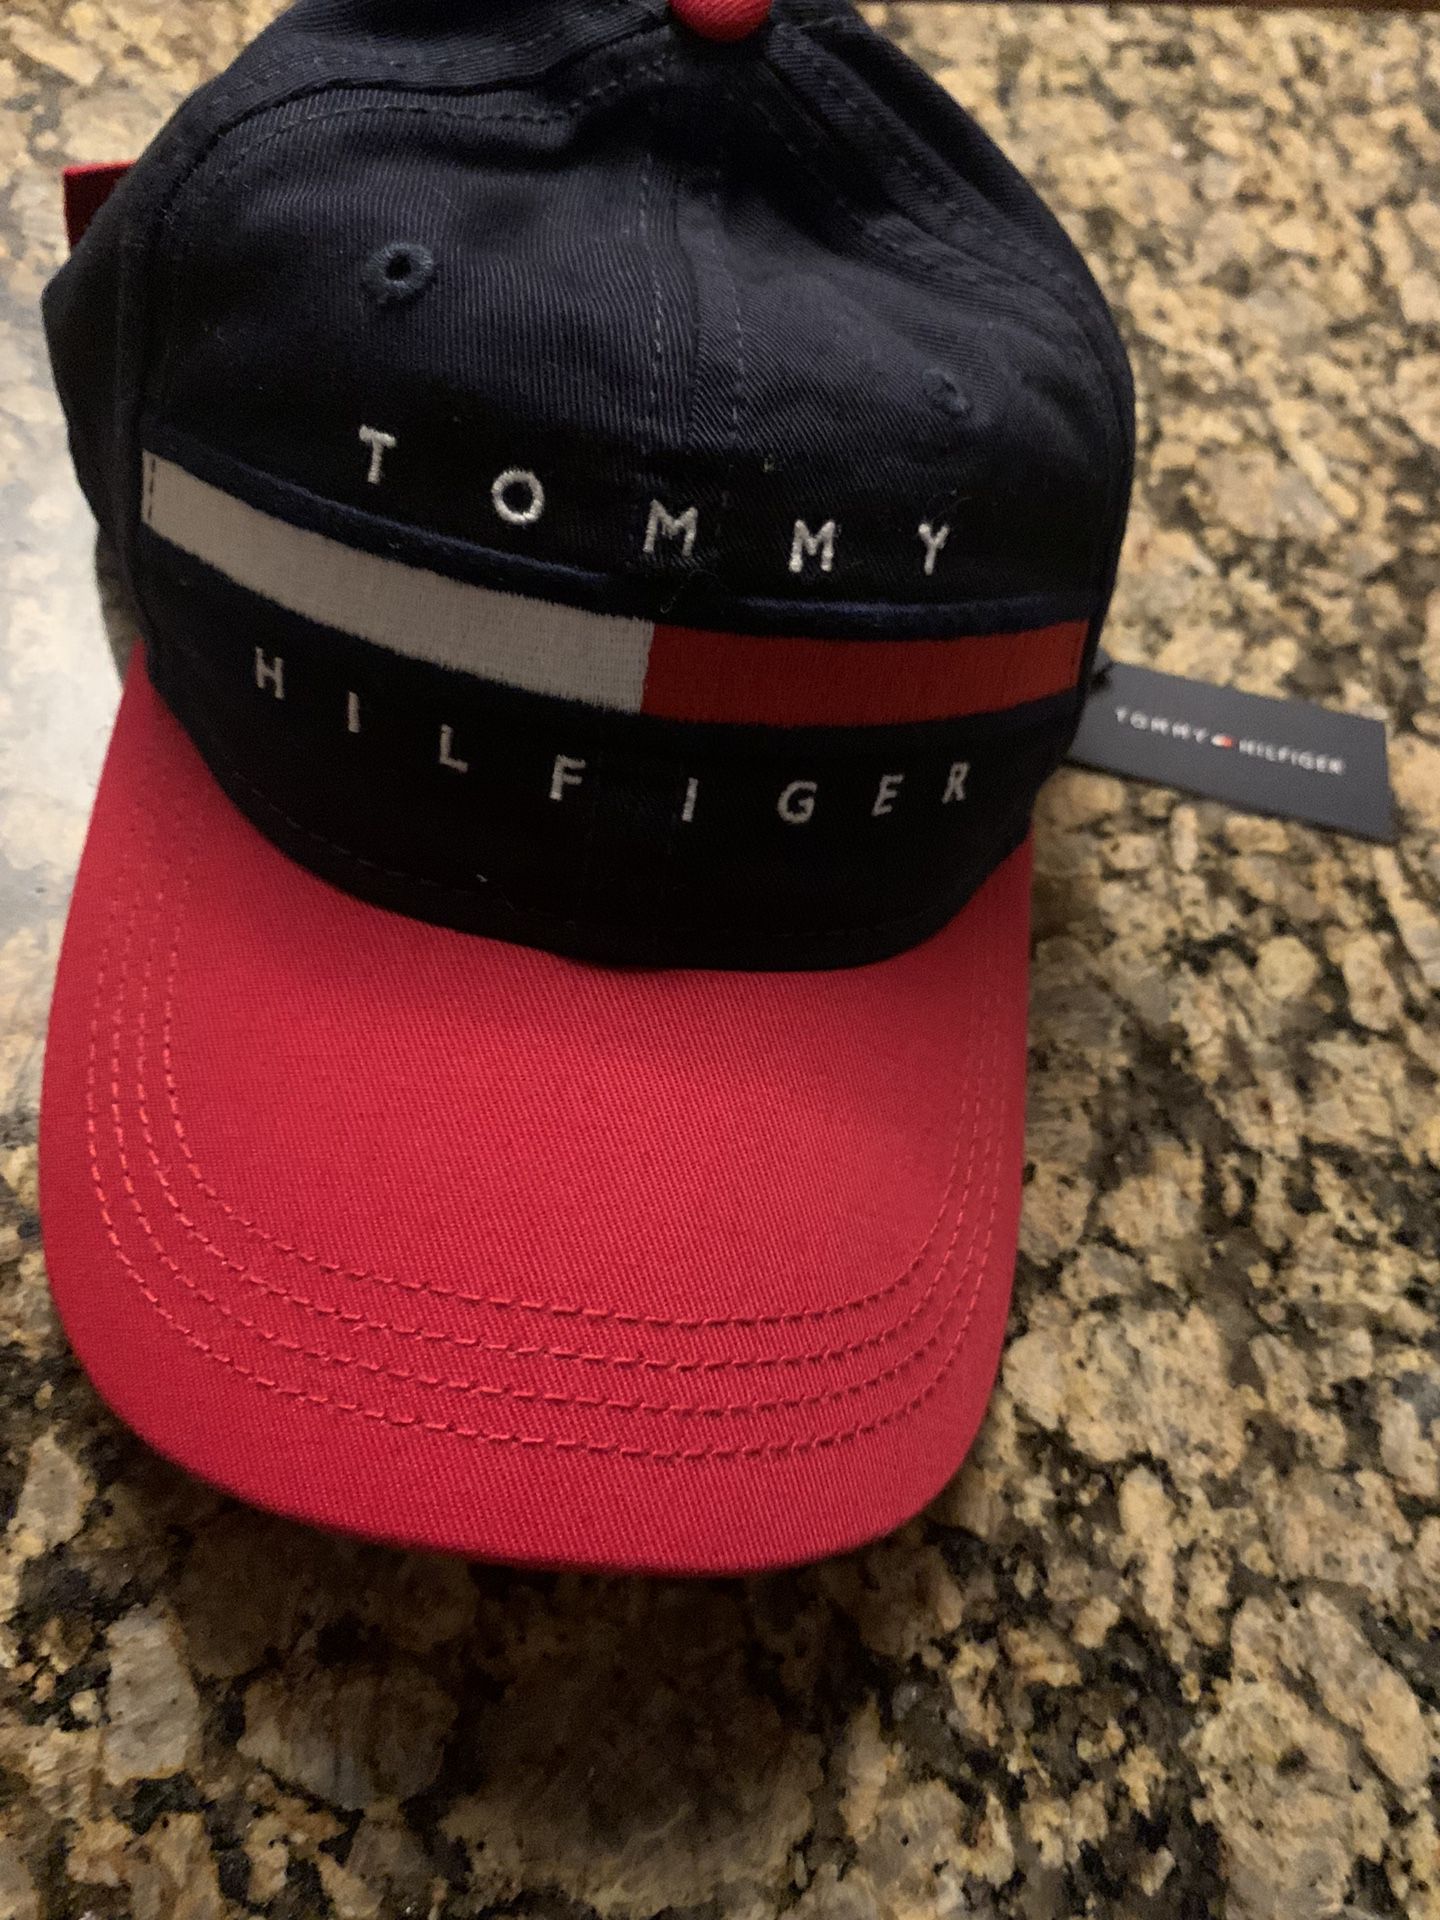 TOMMY HILFIGER HAT BRAND NEW NEVER WORN 